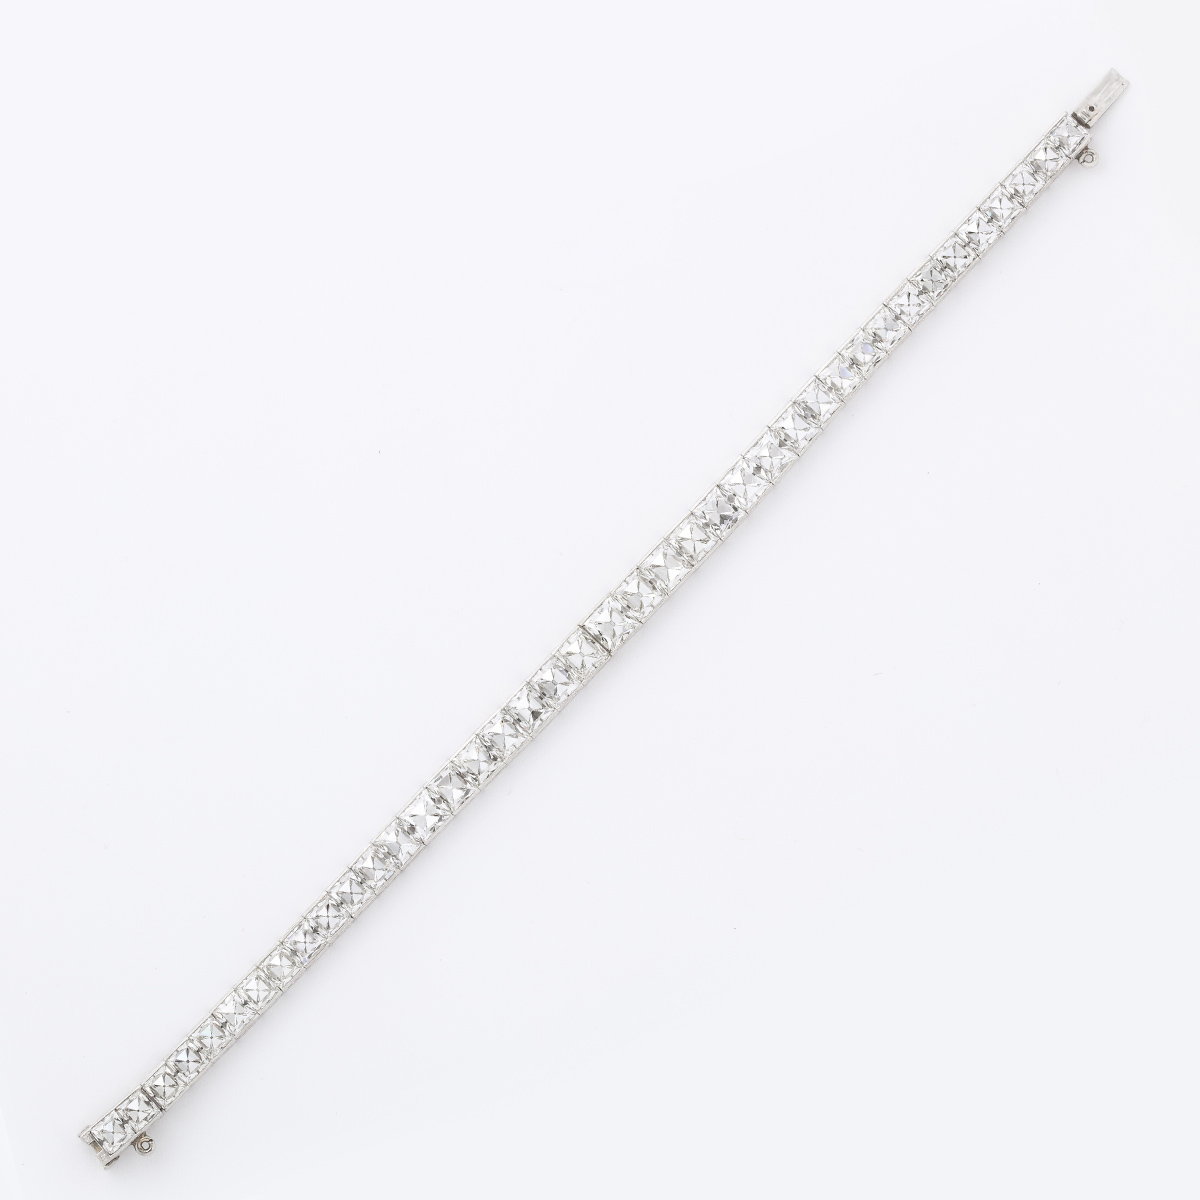 A La Vieille Russie| Antique French-cut Diamond Bracelet by Tiffany & Co.